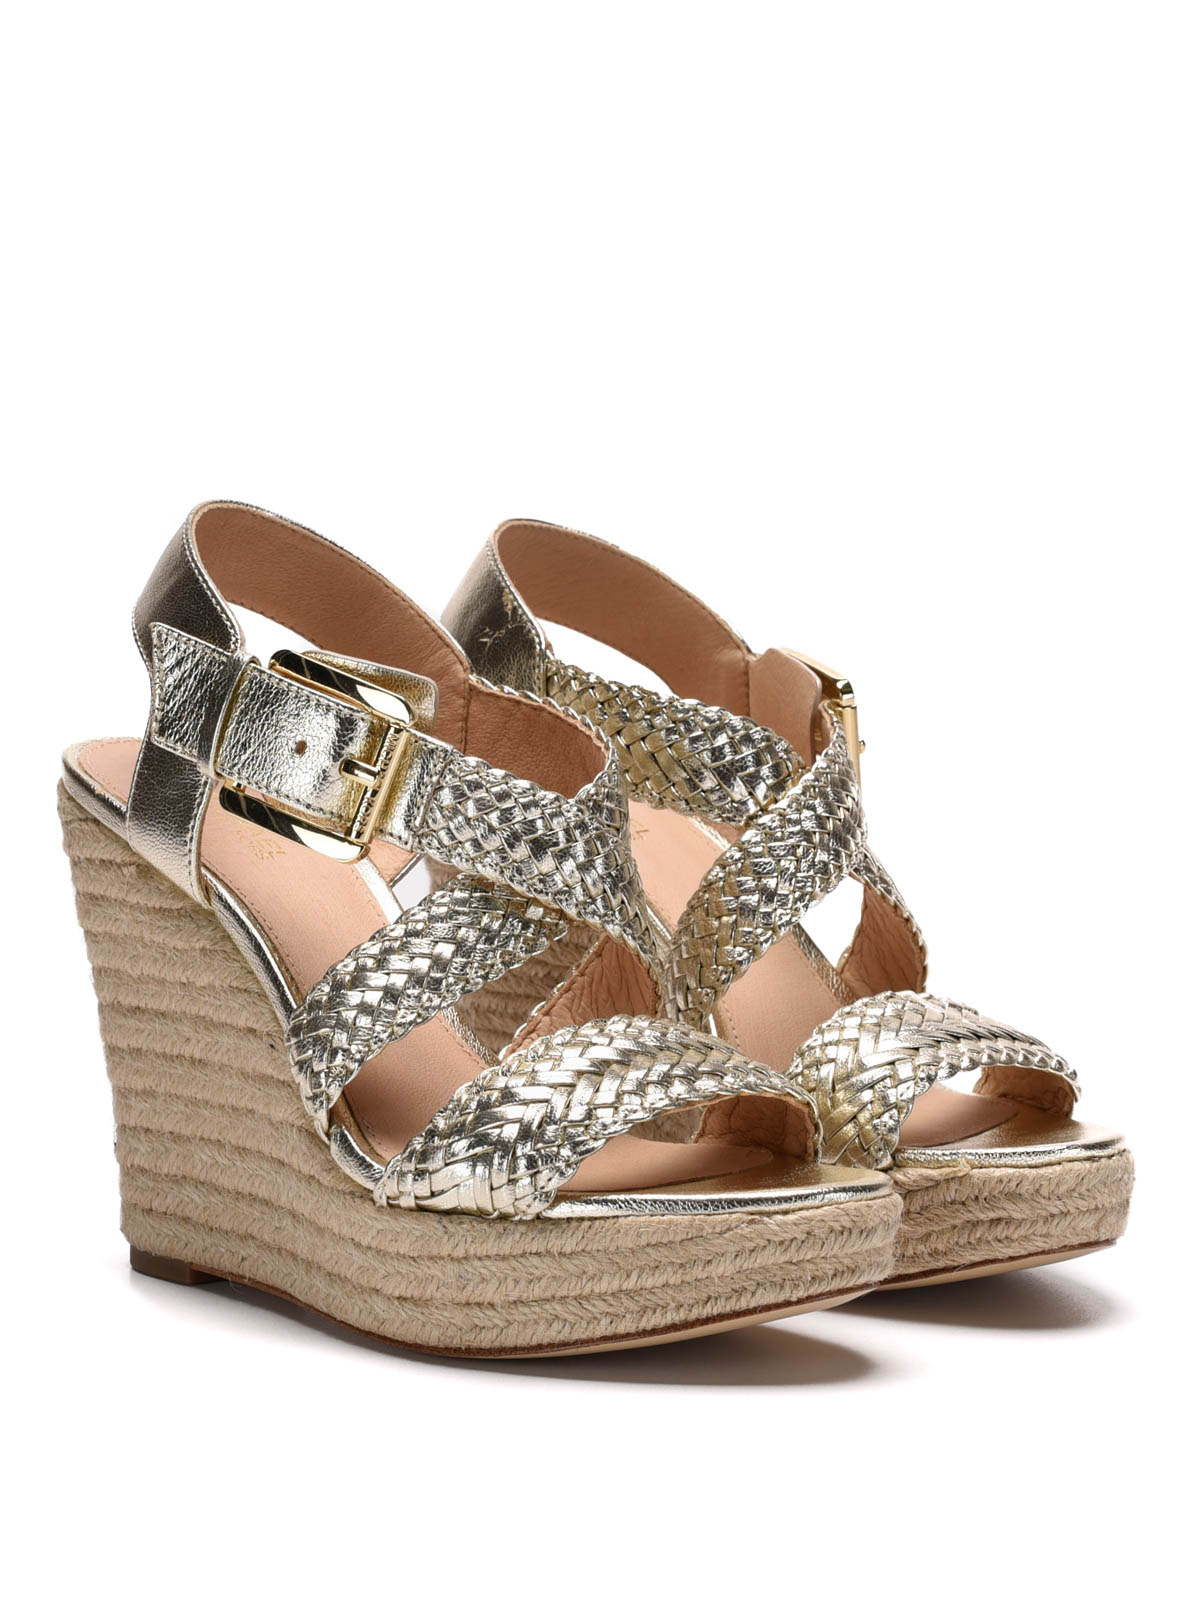 Sandals Michael Kors - Giovanna wedge sandals - 40S6GVHA2M 